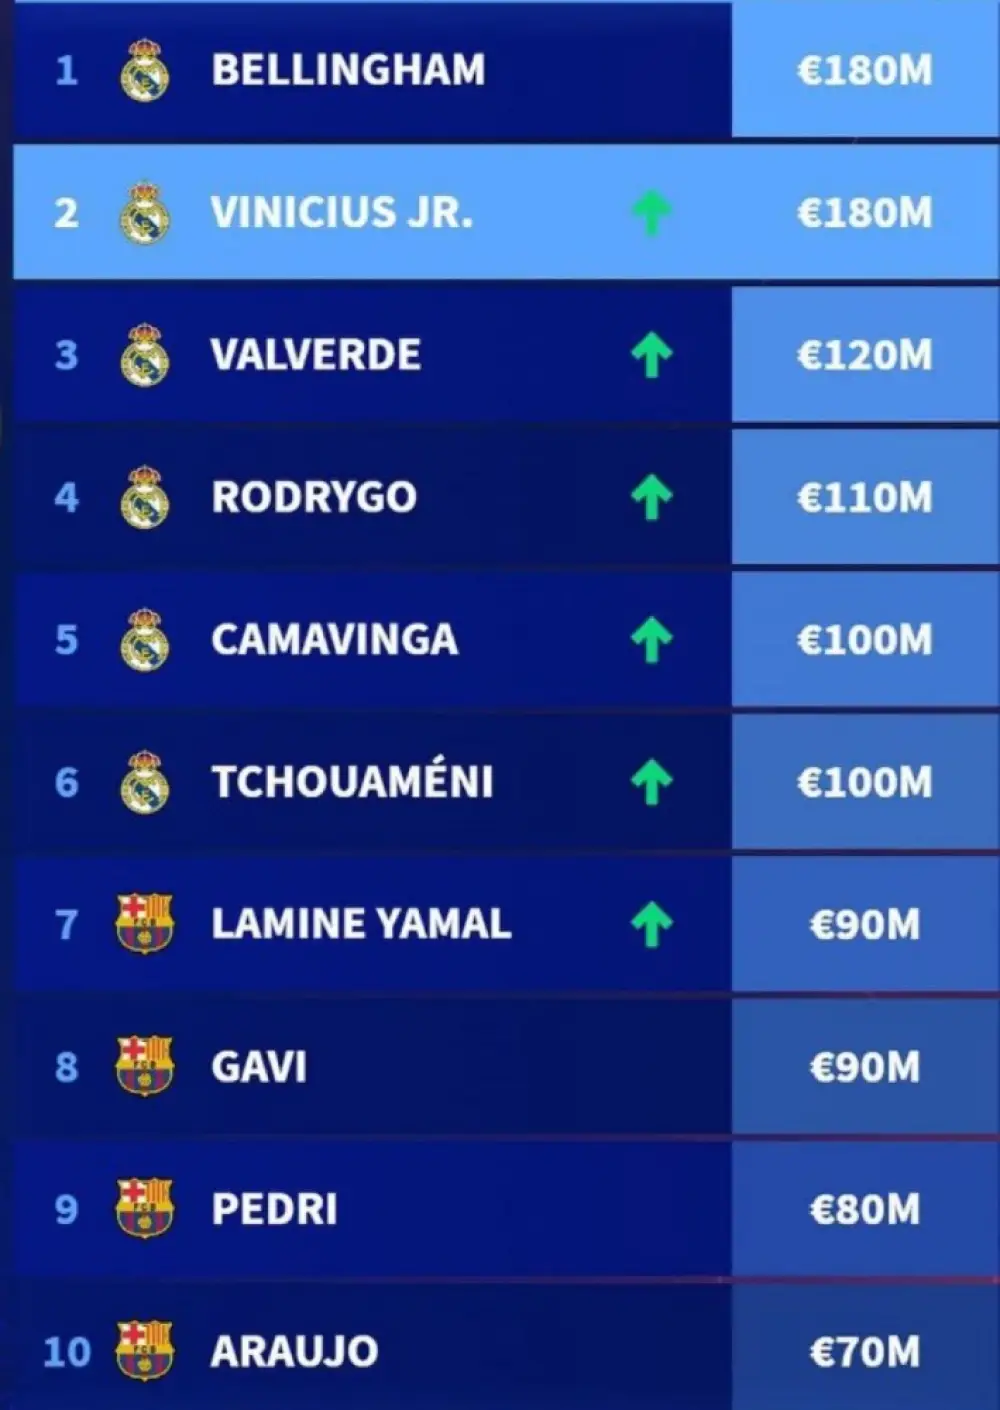 The most expensive La Liga players